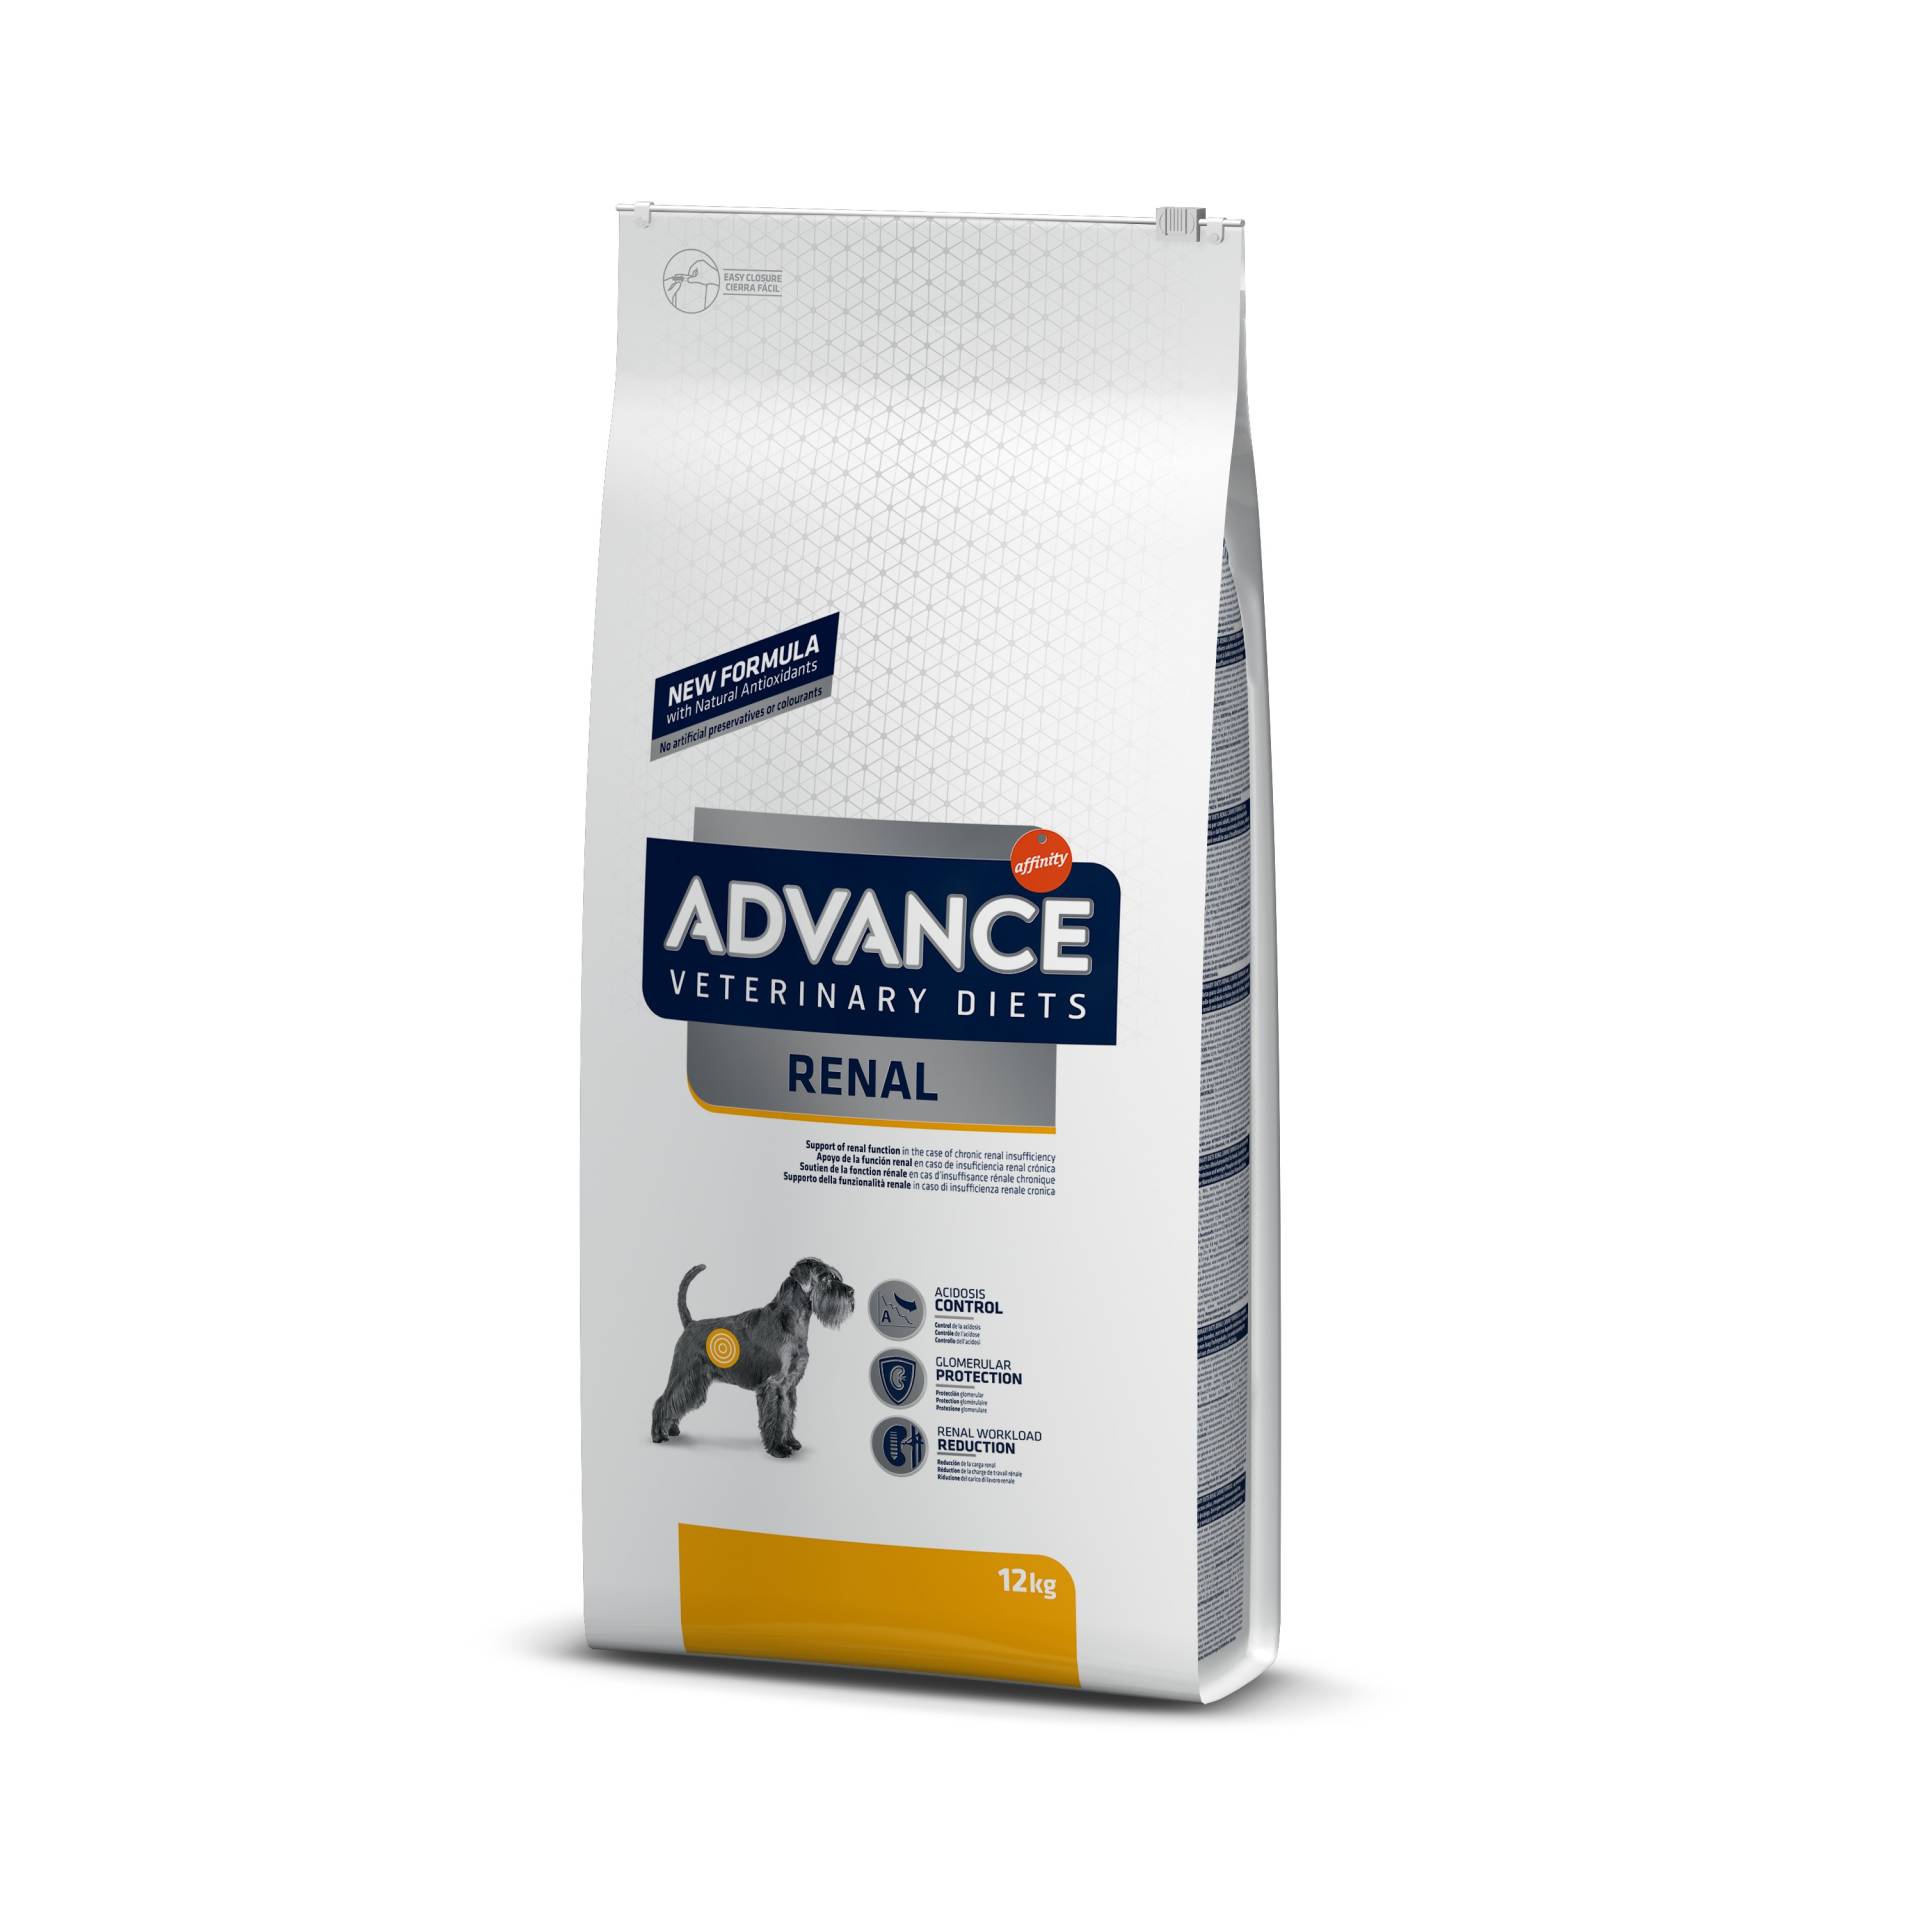 Advance Veterinary Diets Renal - Sparpaket: 2 x 12 kg von Affinity Advance Veterinary Diets